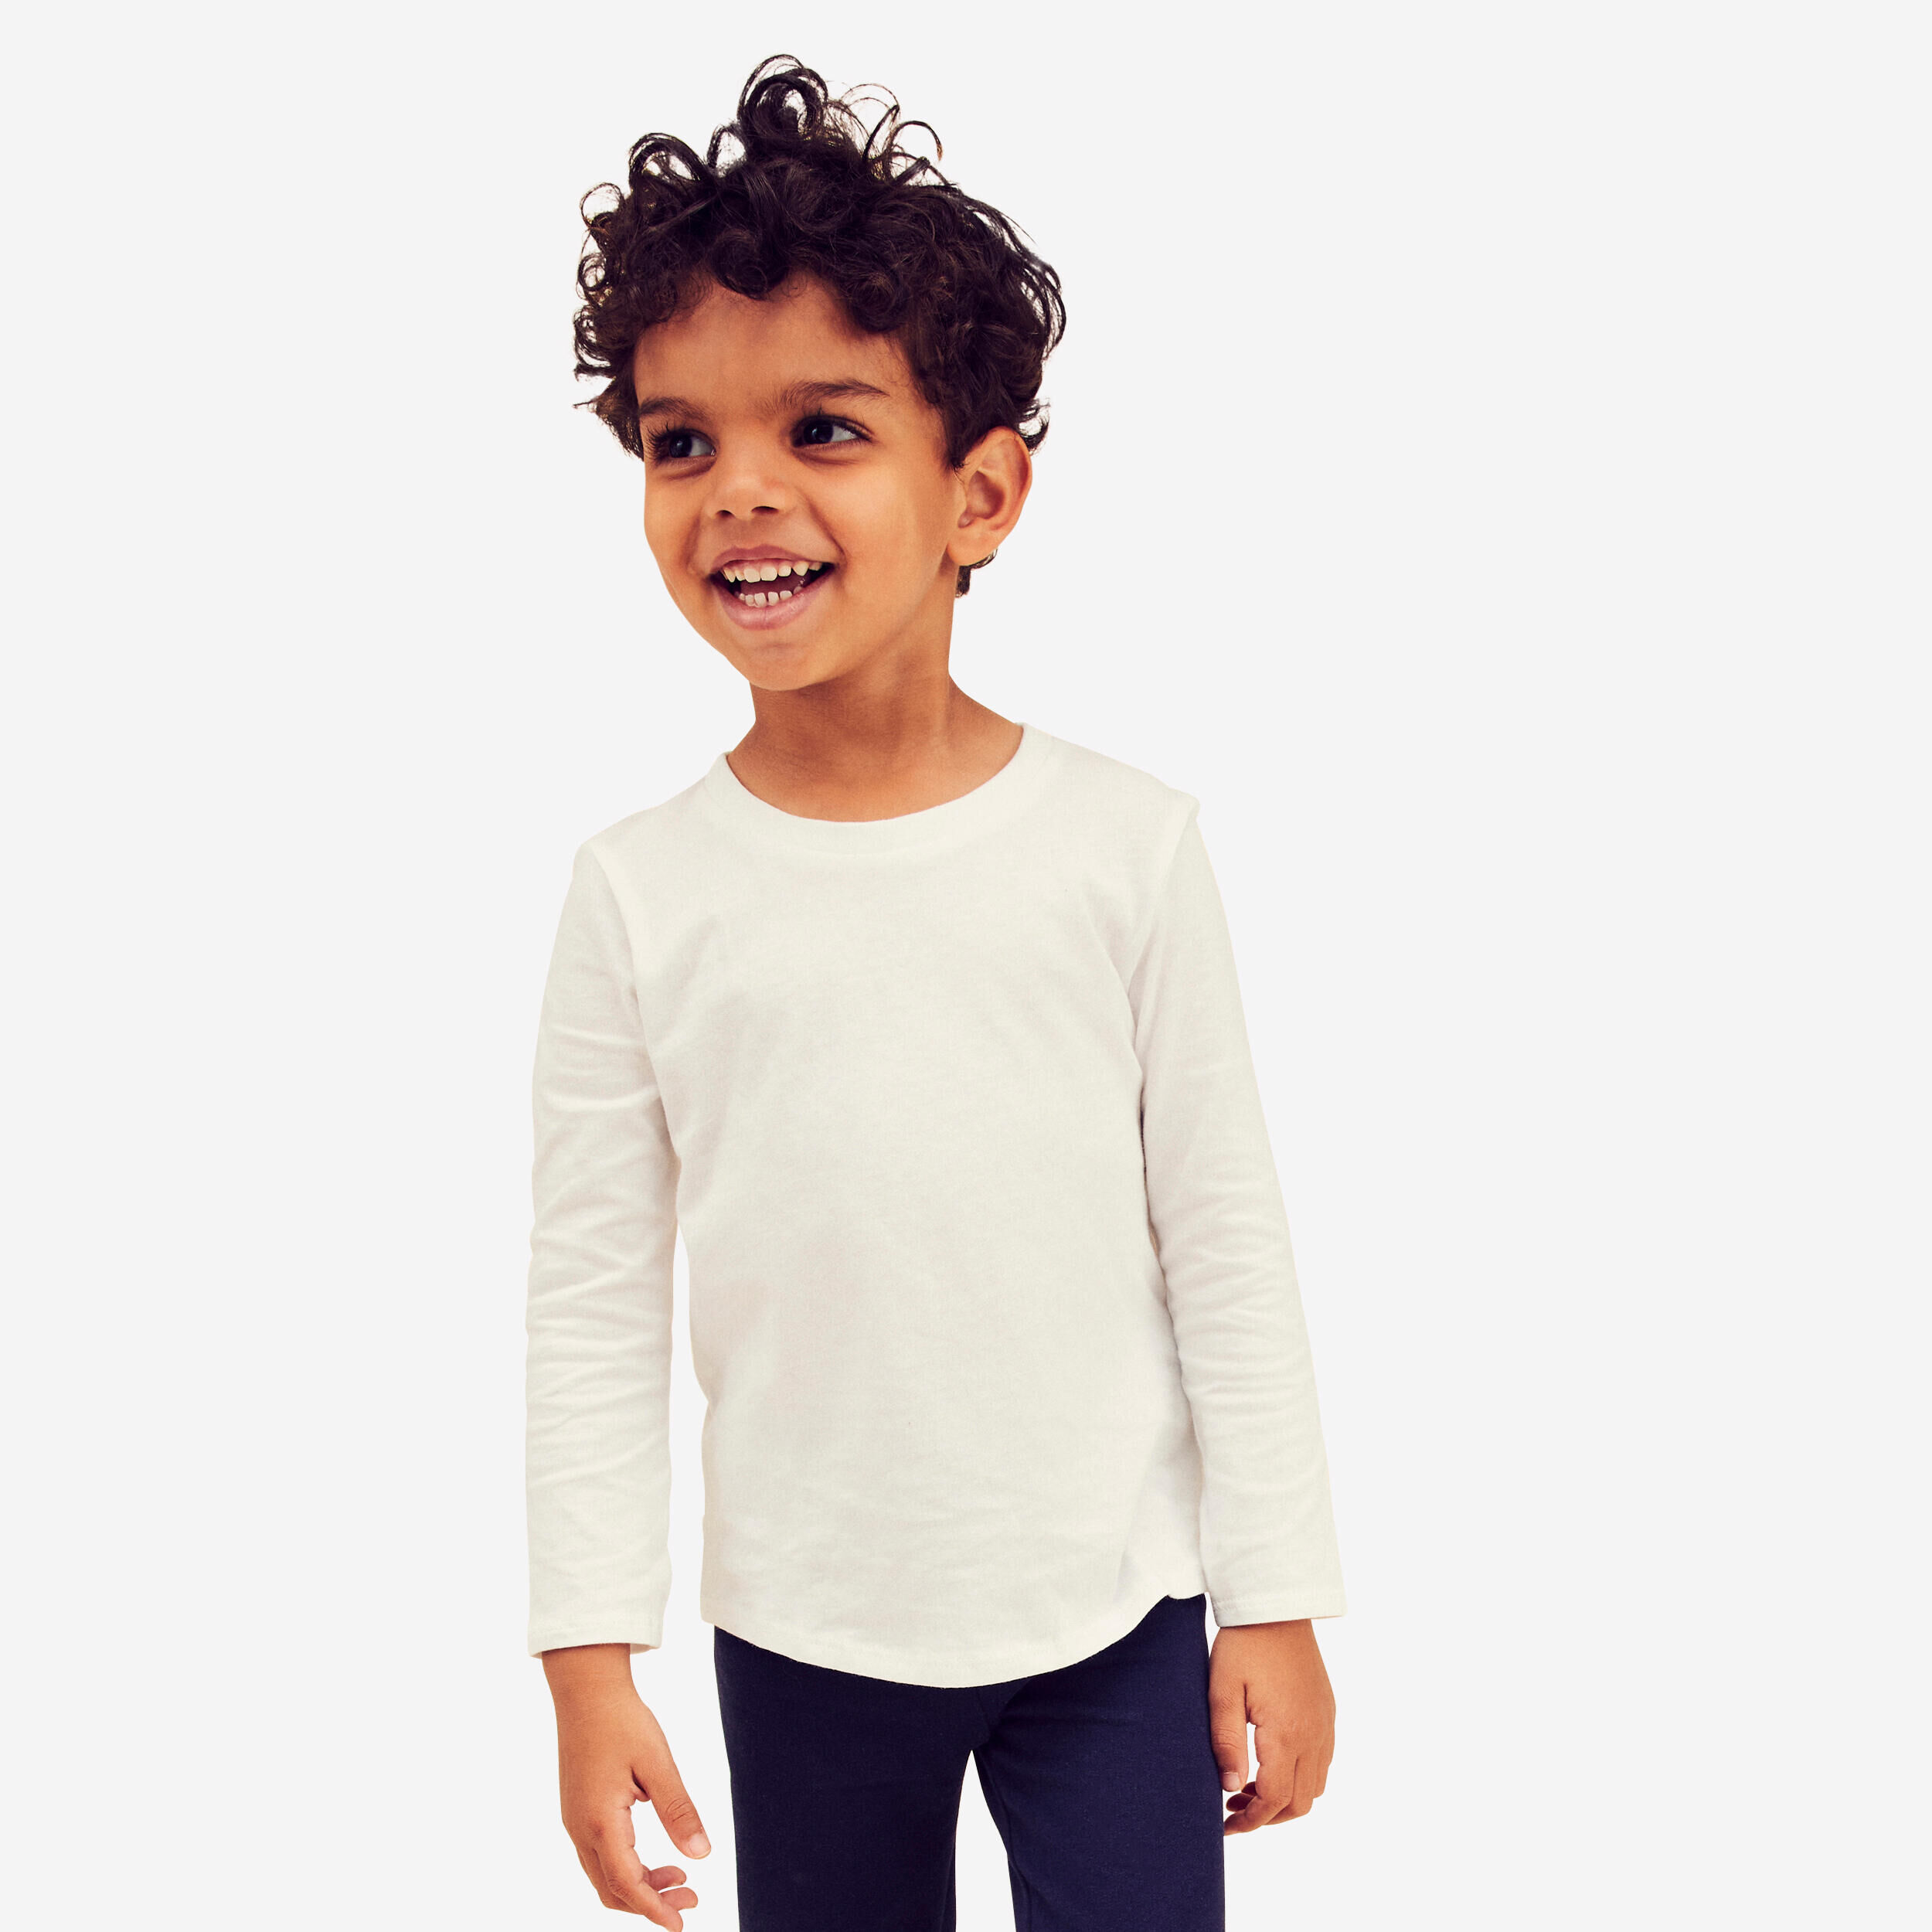 DOMYOS Kids' Basic Cotton Long-Sleeved T-Shirt - White